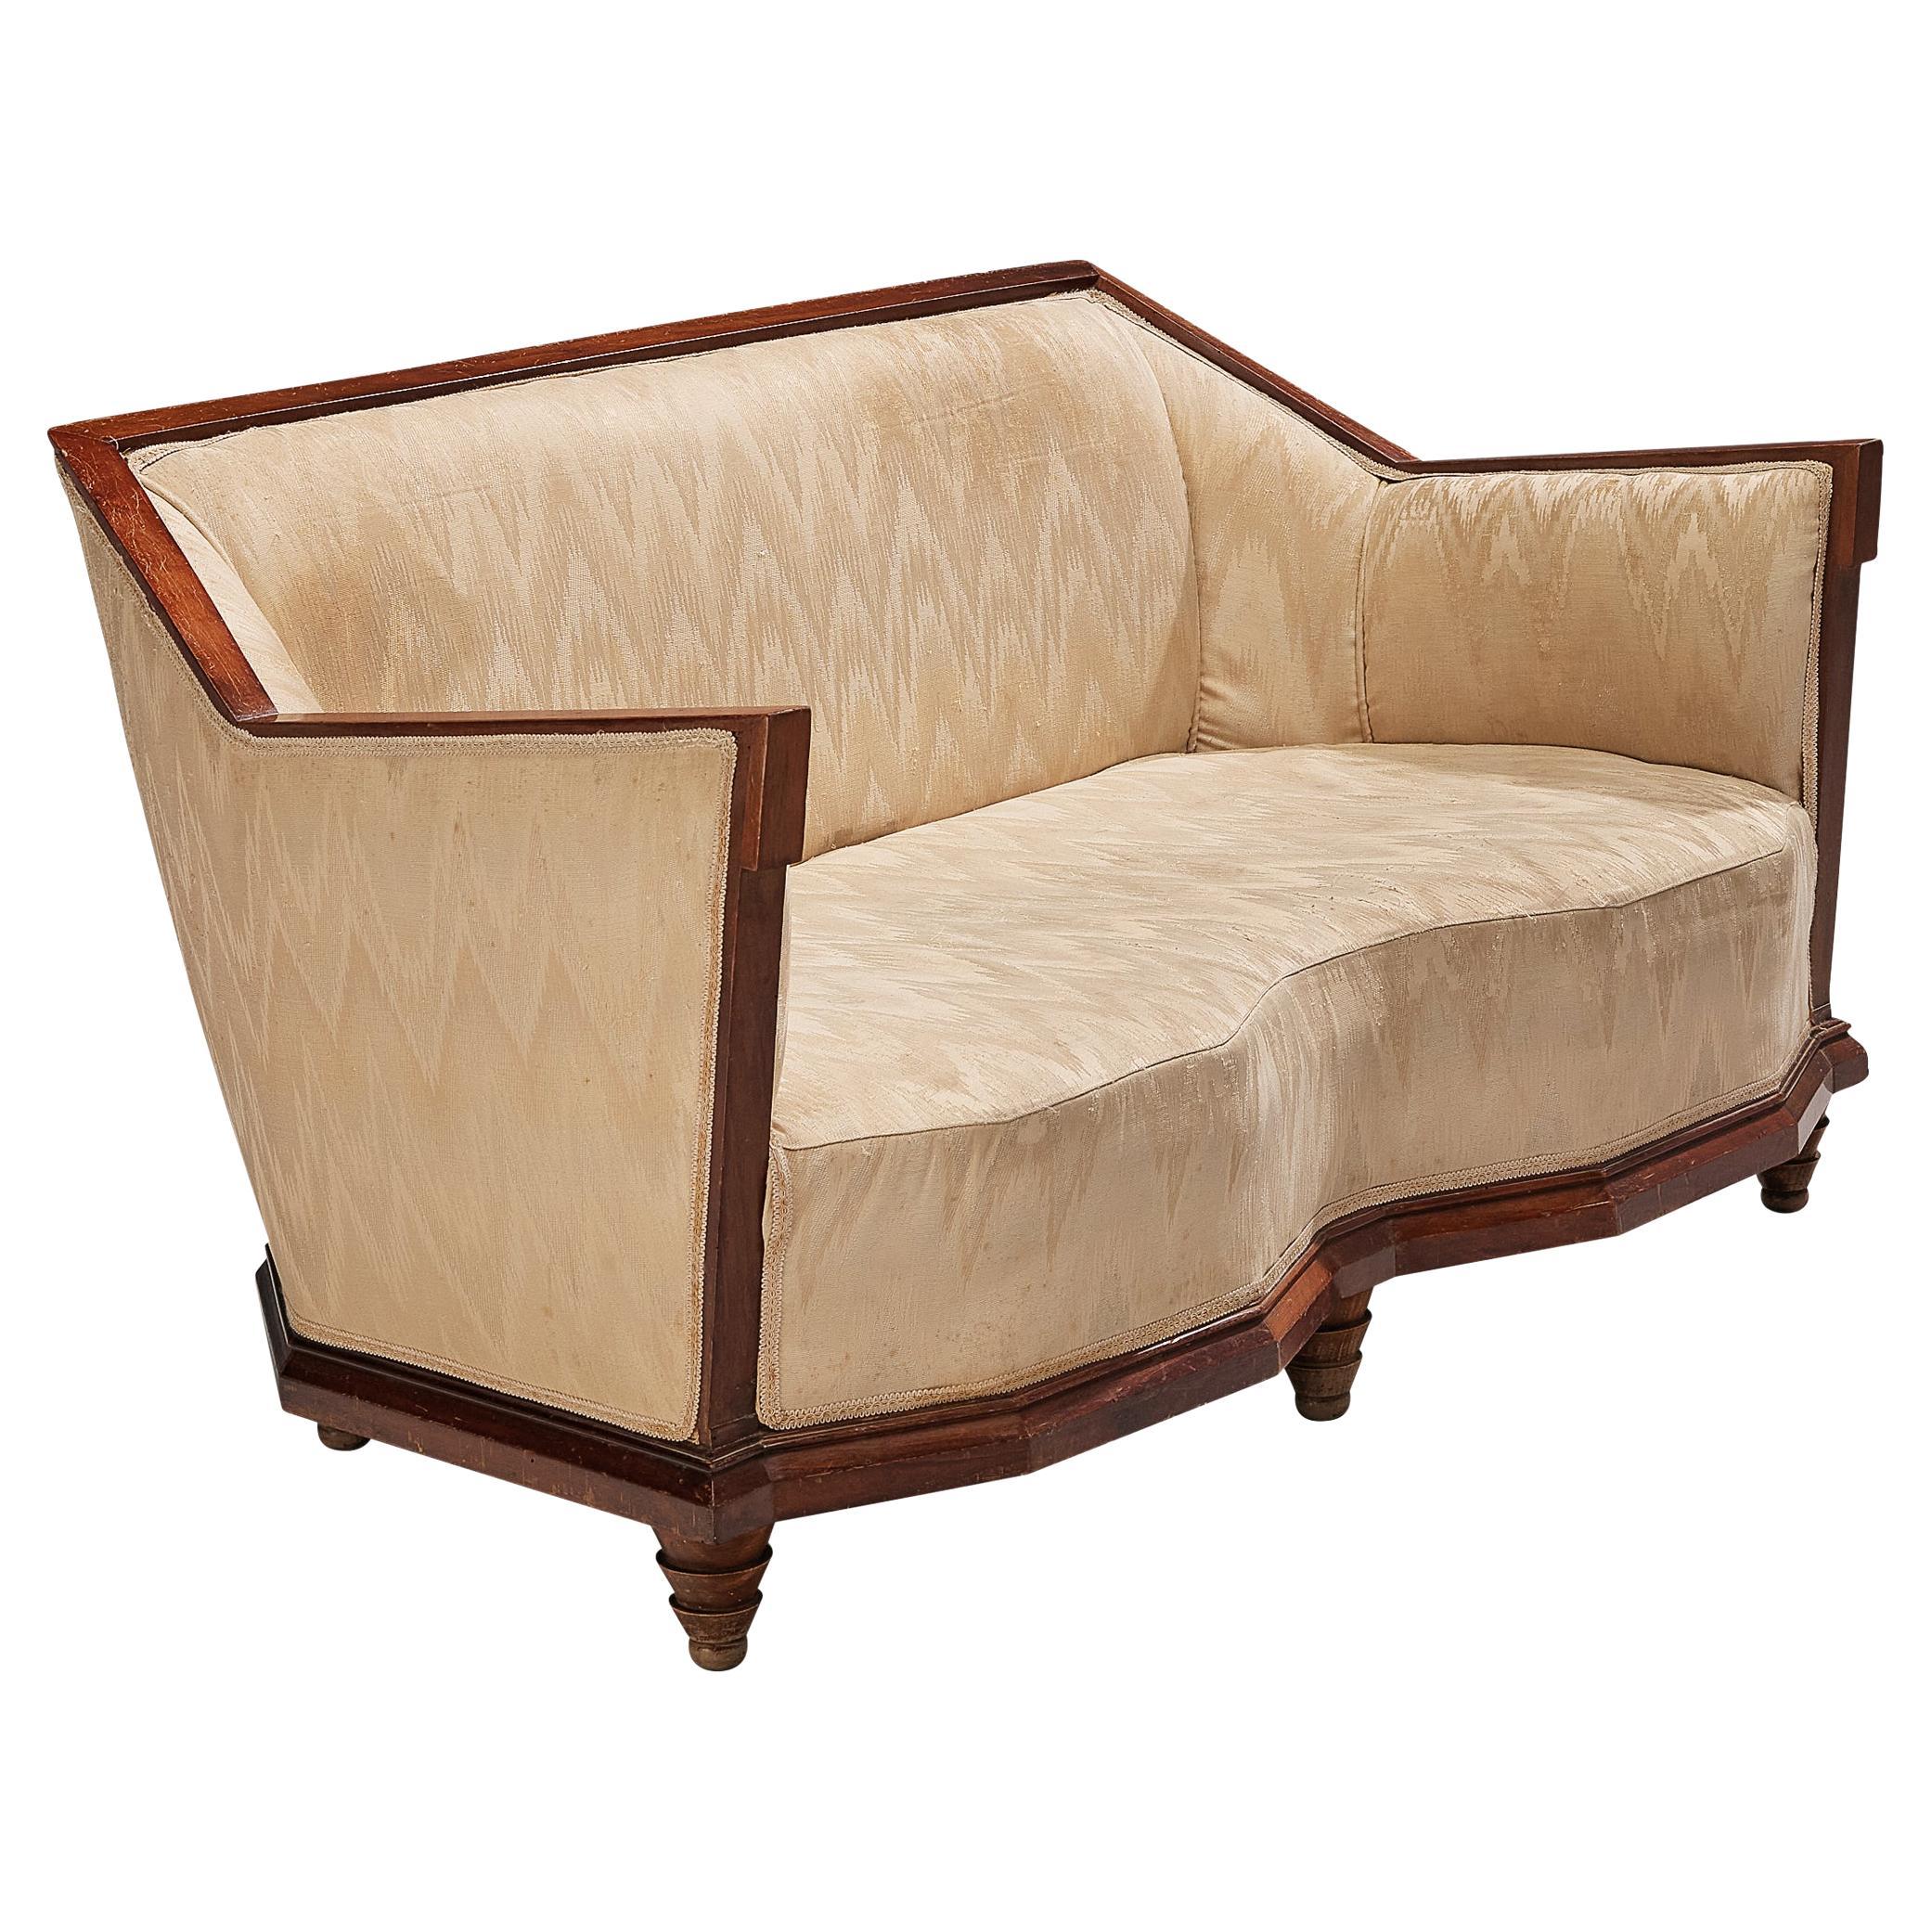 Italian Art Deco Sofa in Walnut and Silk